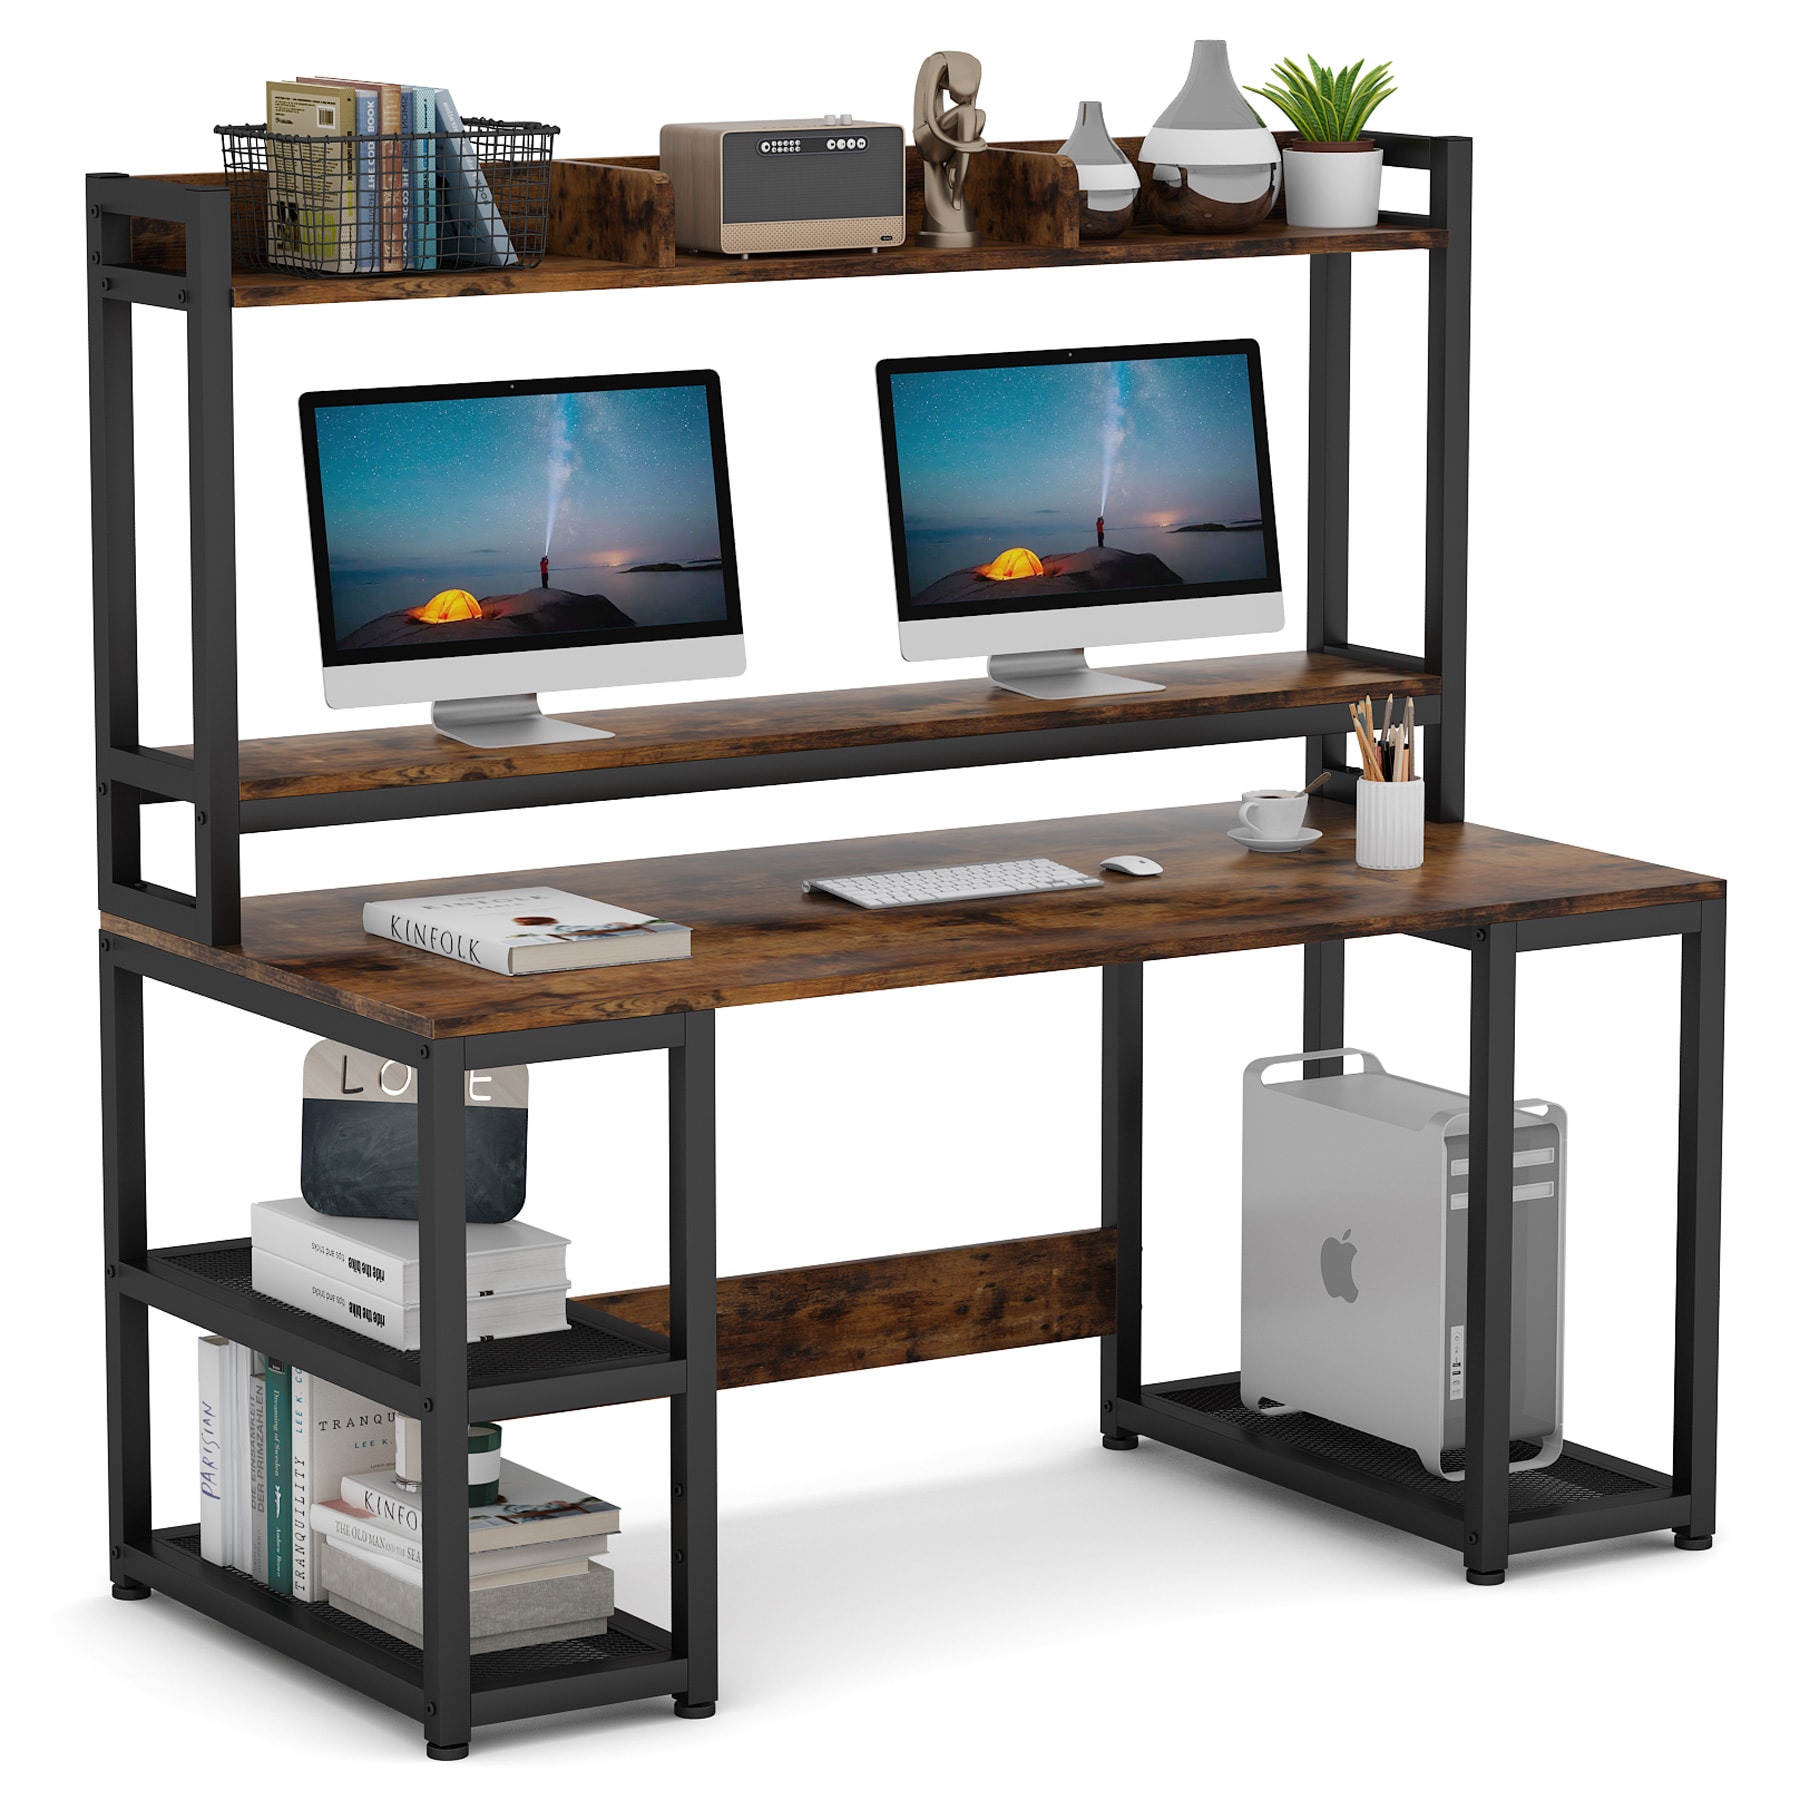 Best Desk Accessories (inc Grovemade, OrbitKey) - SpawnPoiint